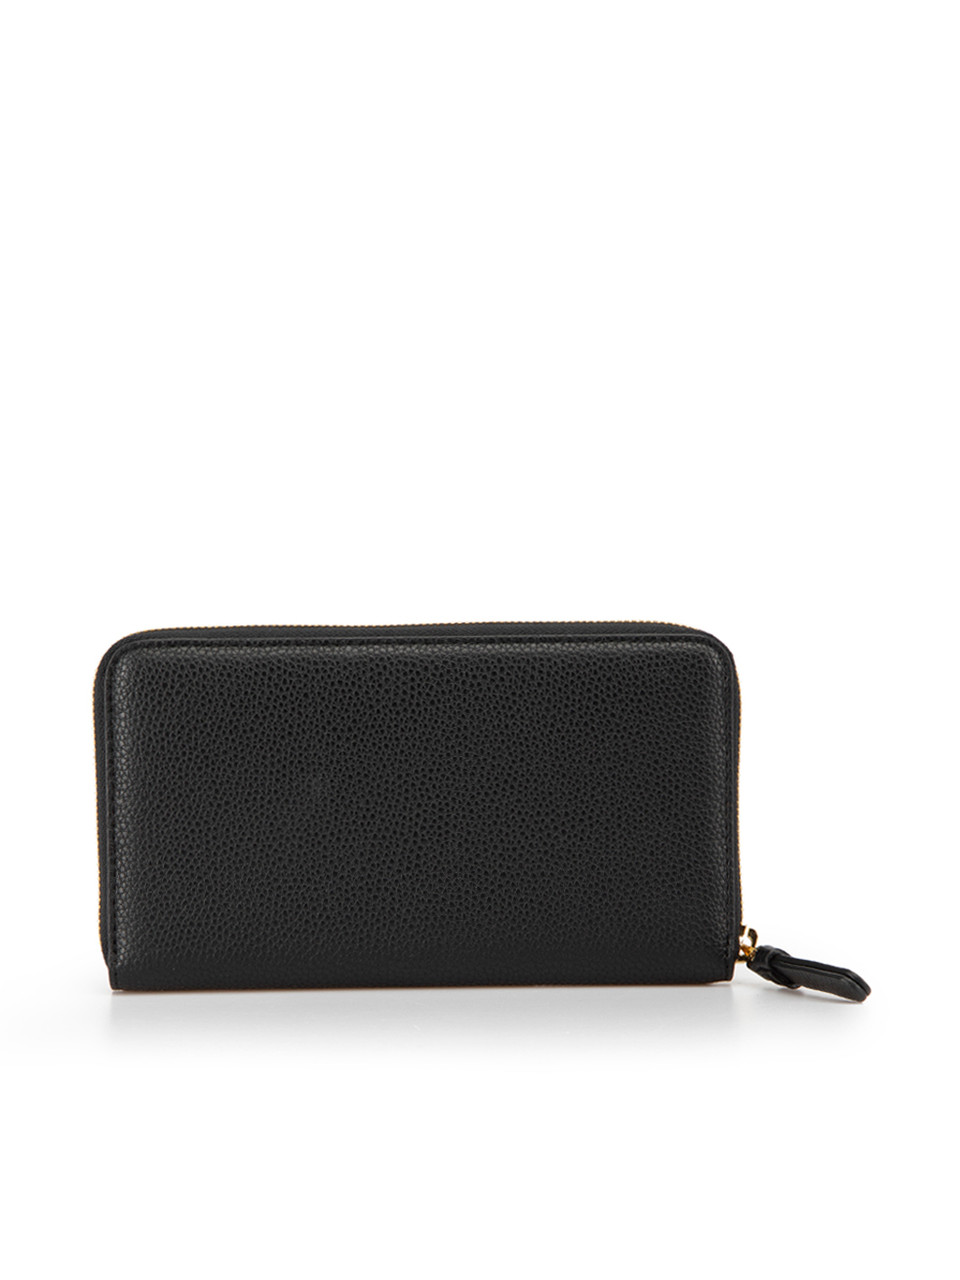 Emporio Armani Black Leather Continental Wallet